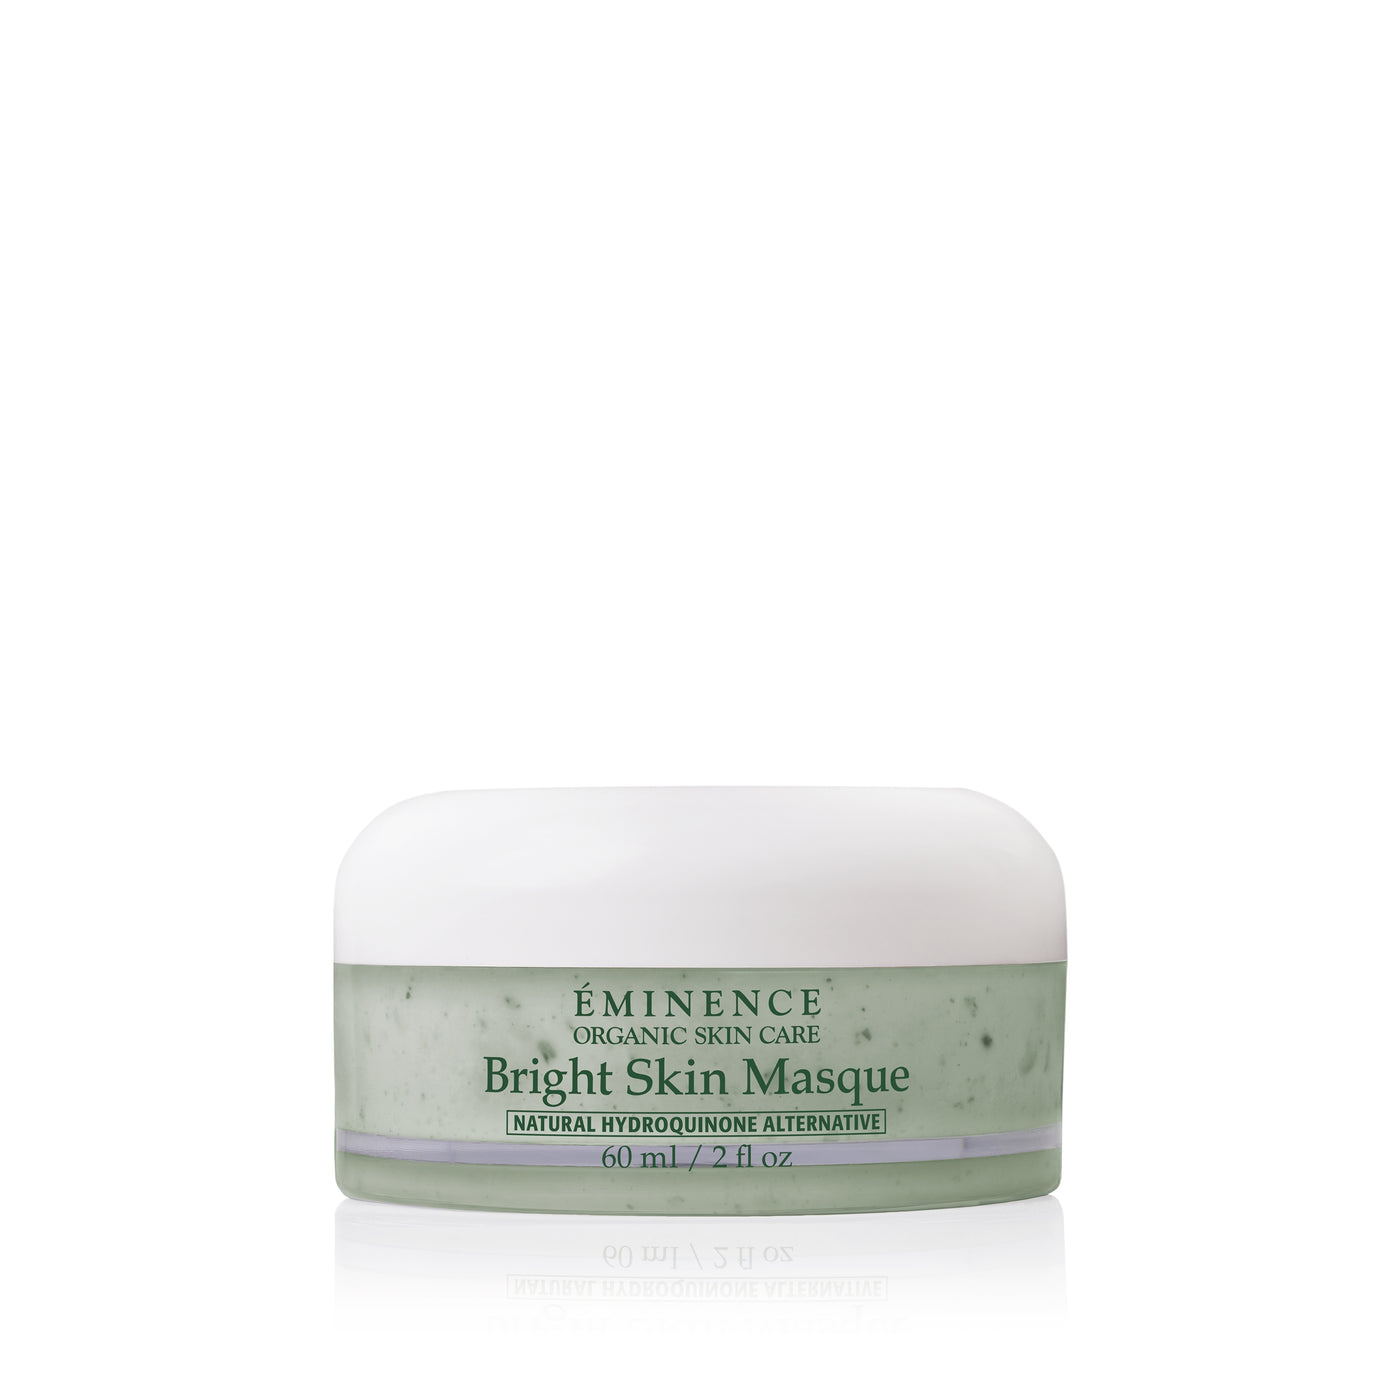 Eminence Organics Bright Skin Masque - Radiance Clean Beauty